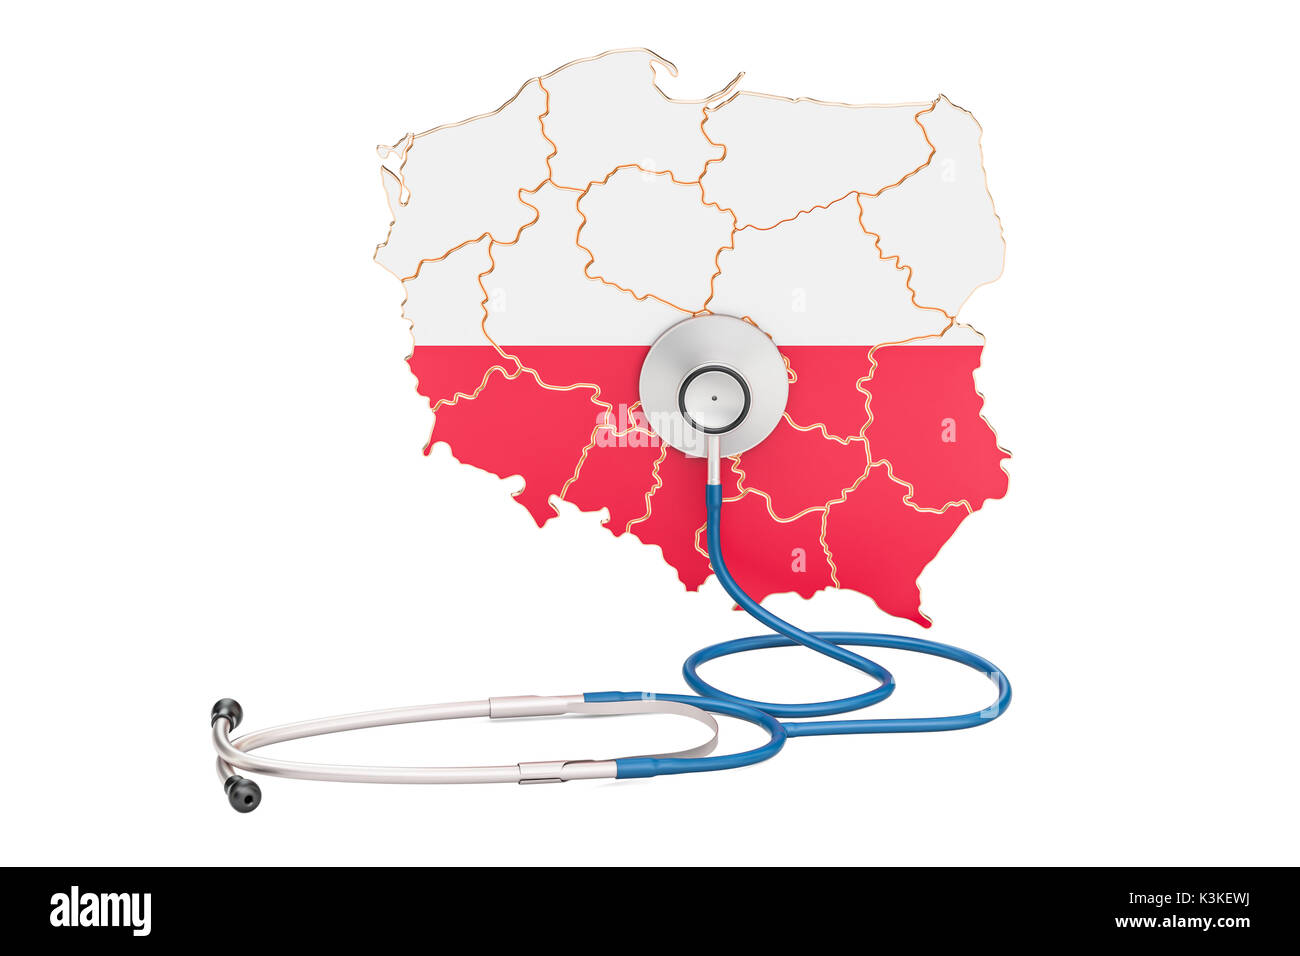 Polnische Karte mit Stethoskop, national Health Care Concept, 3D-Rendering Stockfoto